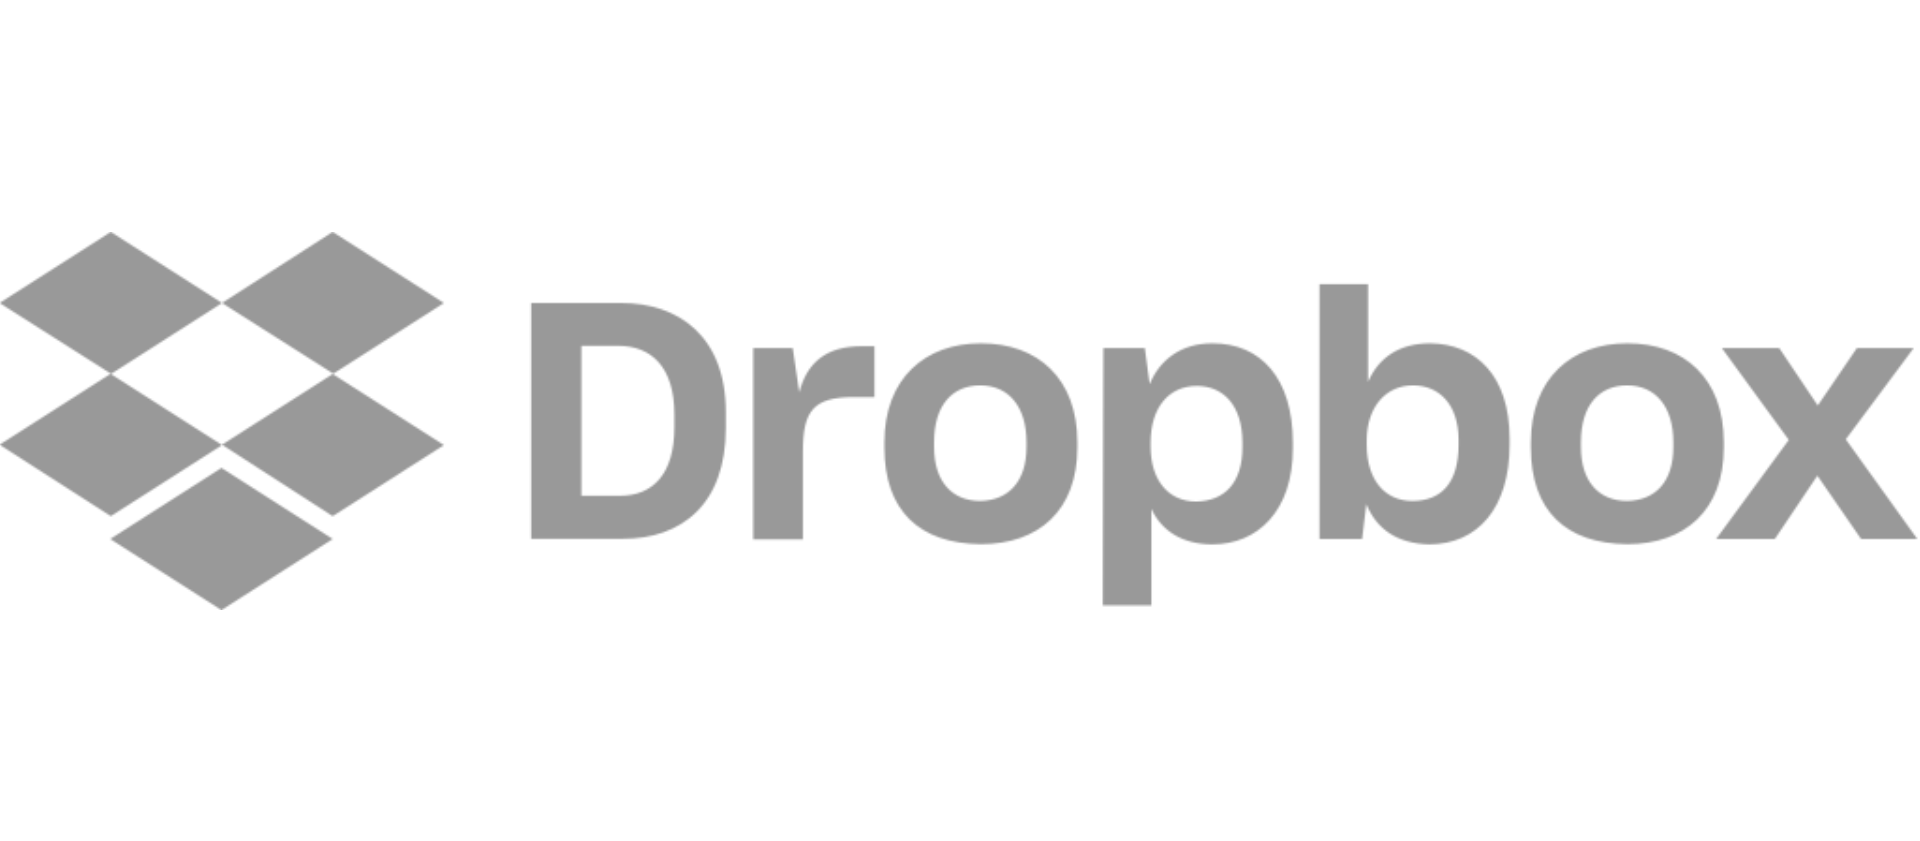 PB Projects Dropbox Logo Grey